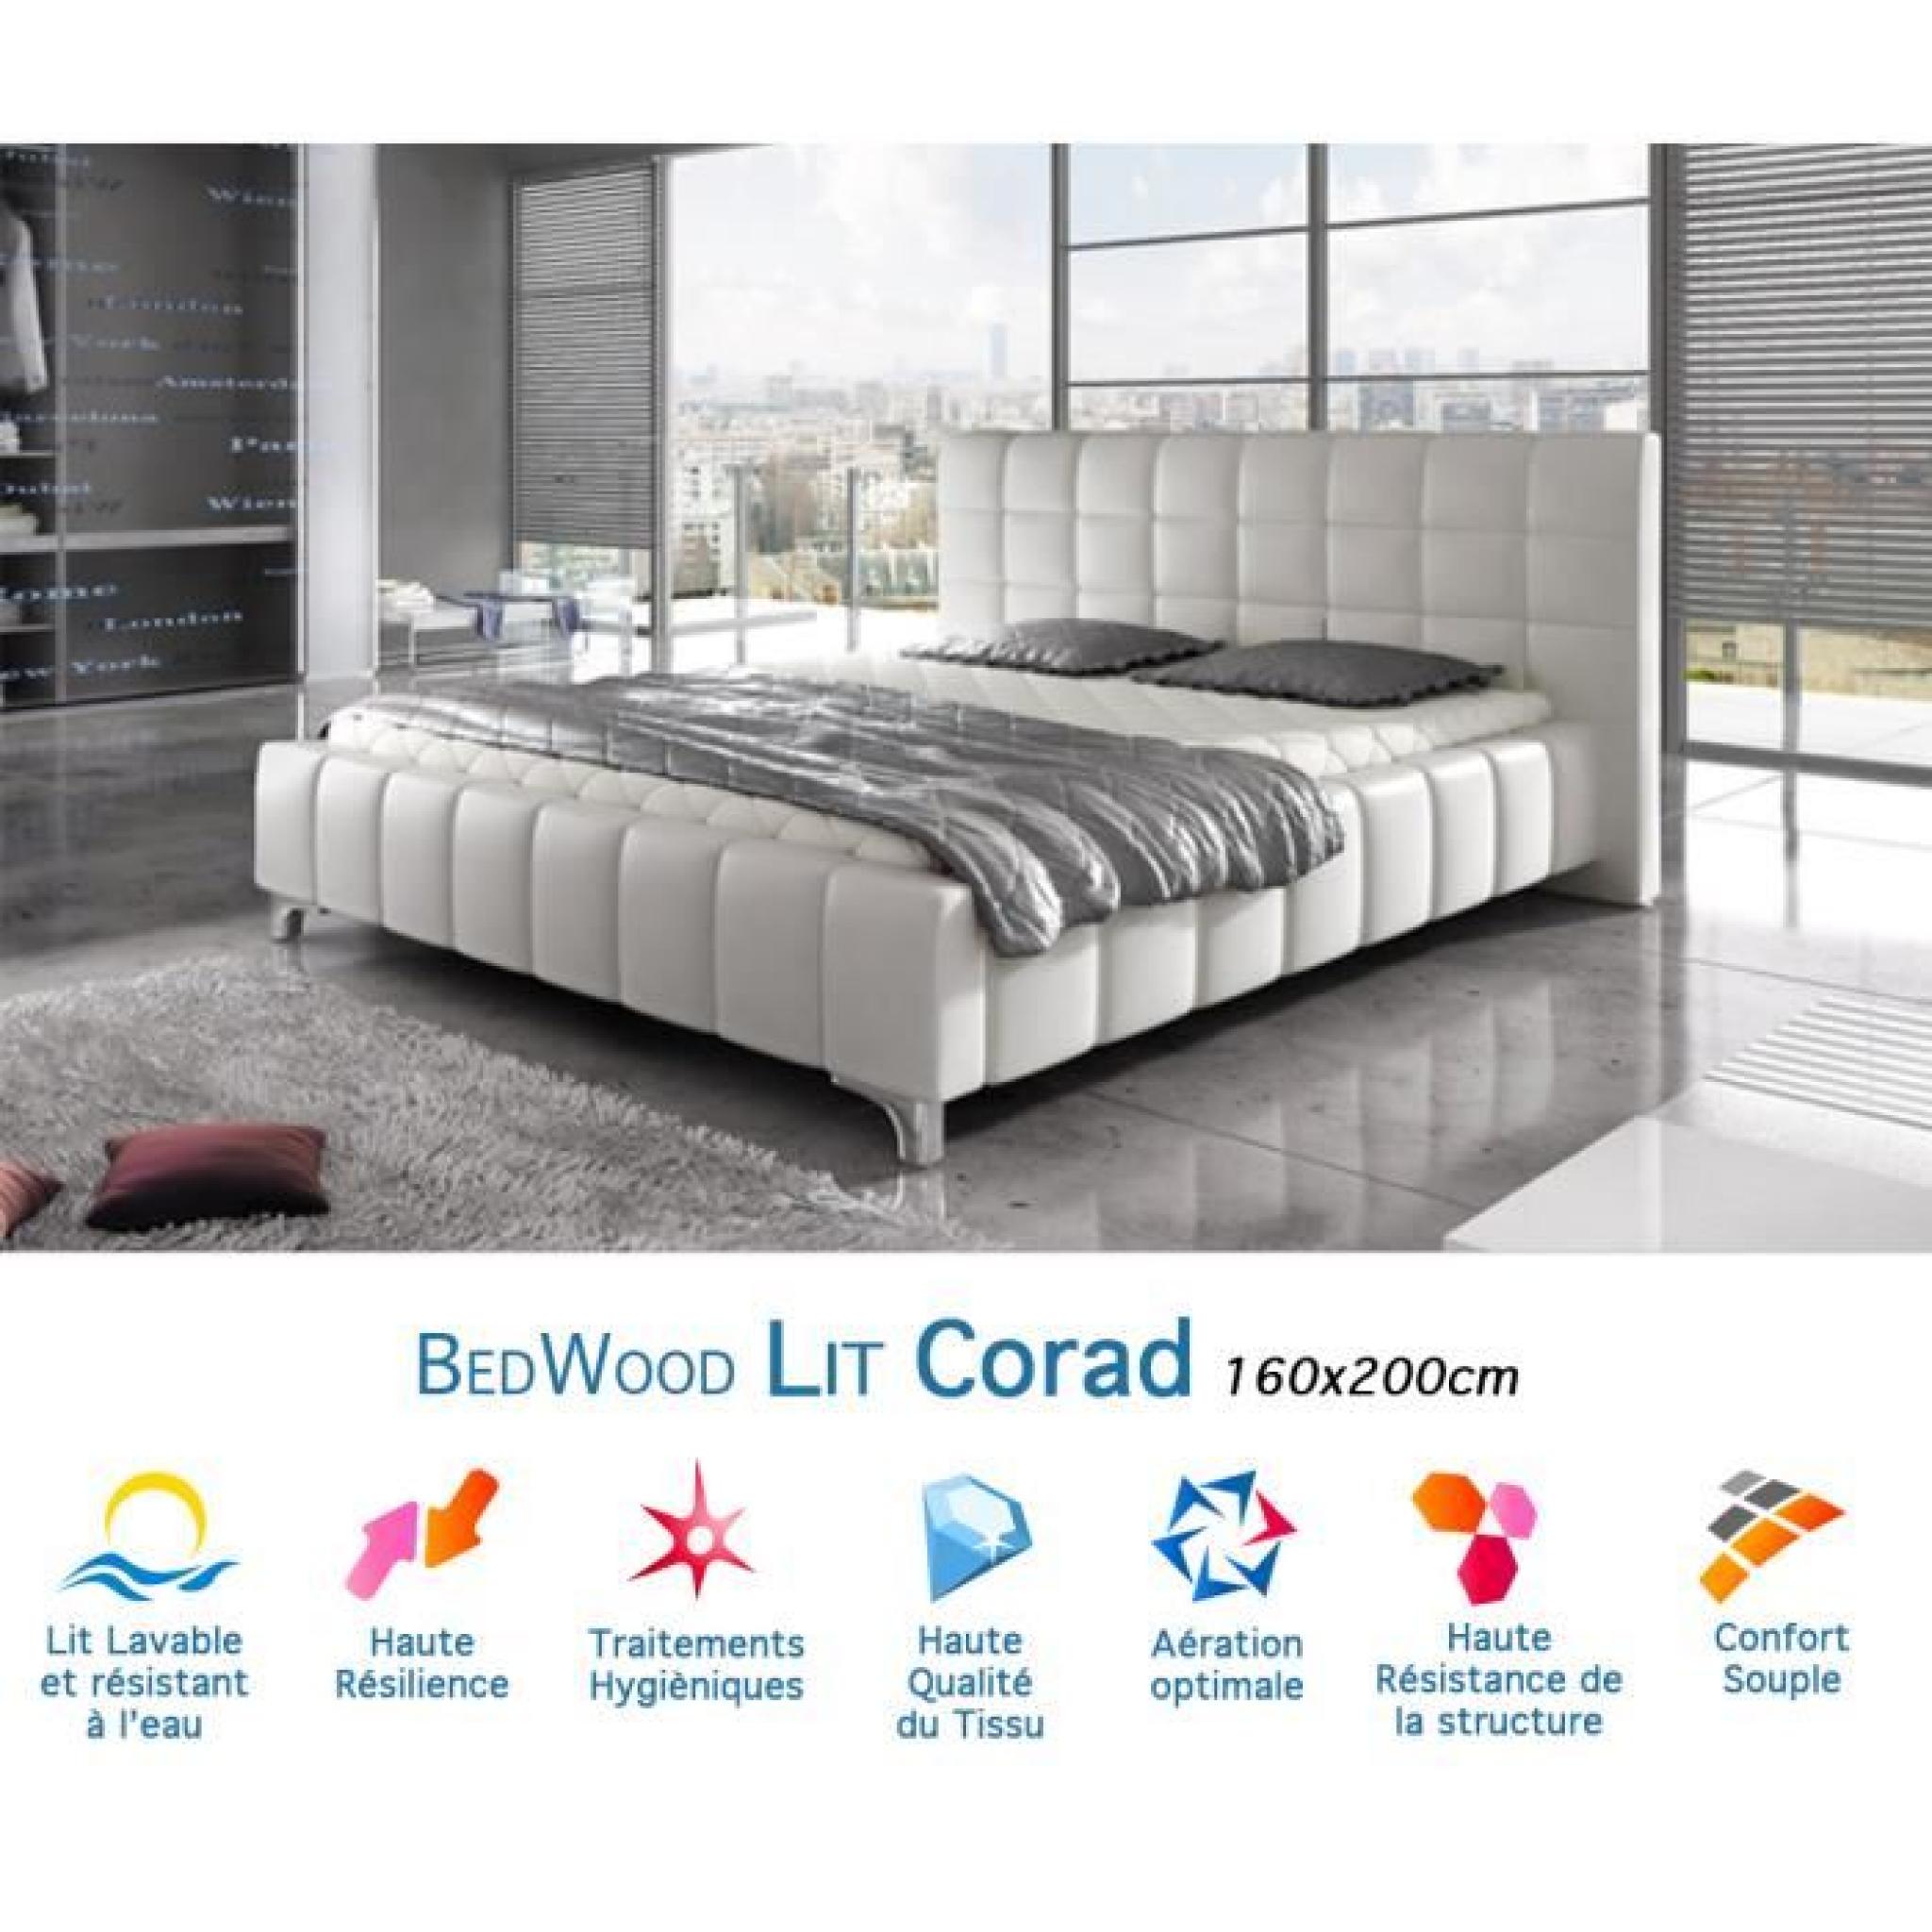 Lit Design Bedwood Corad 160x200cm